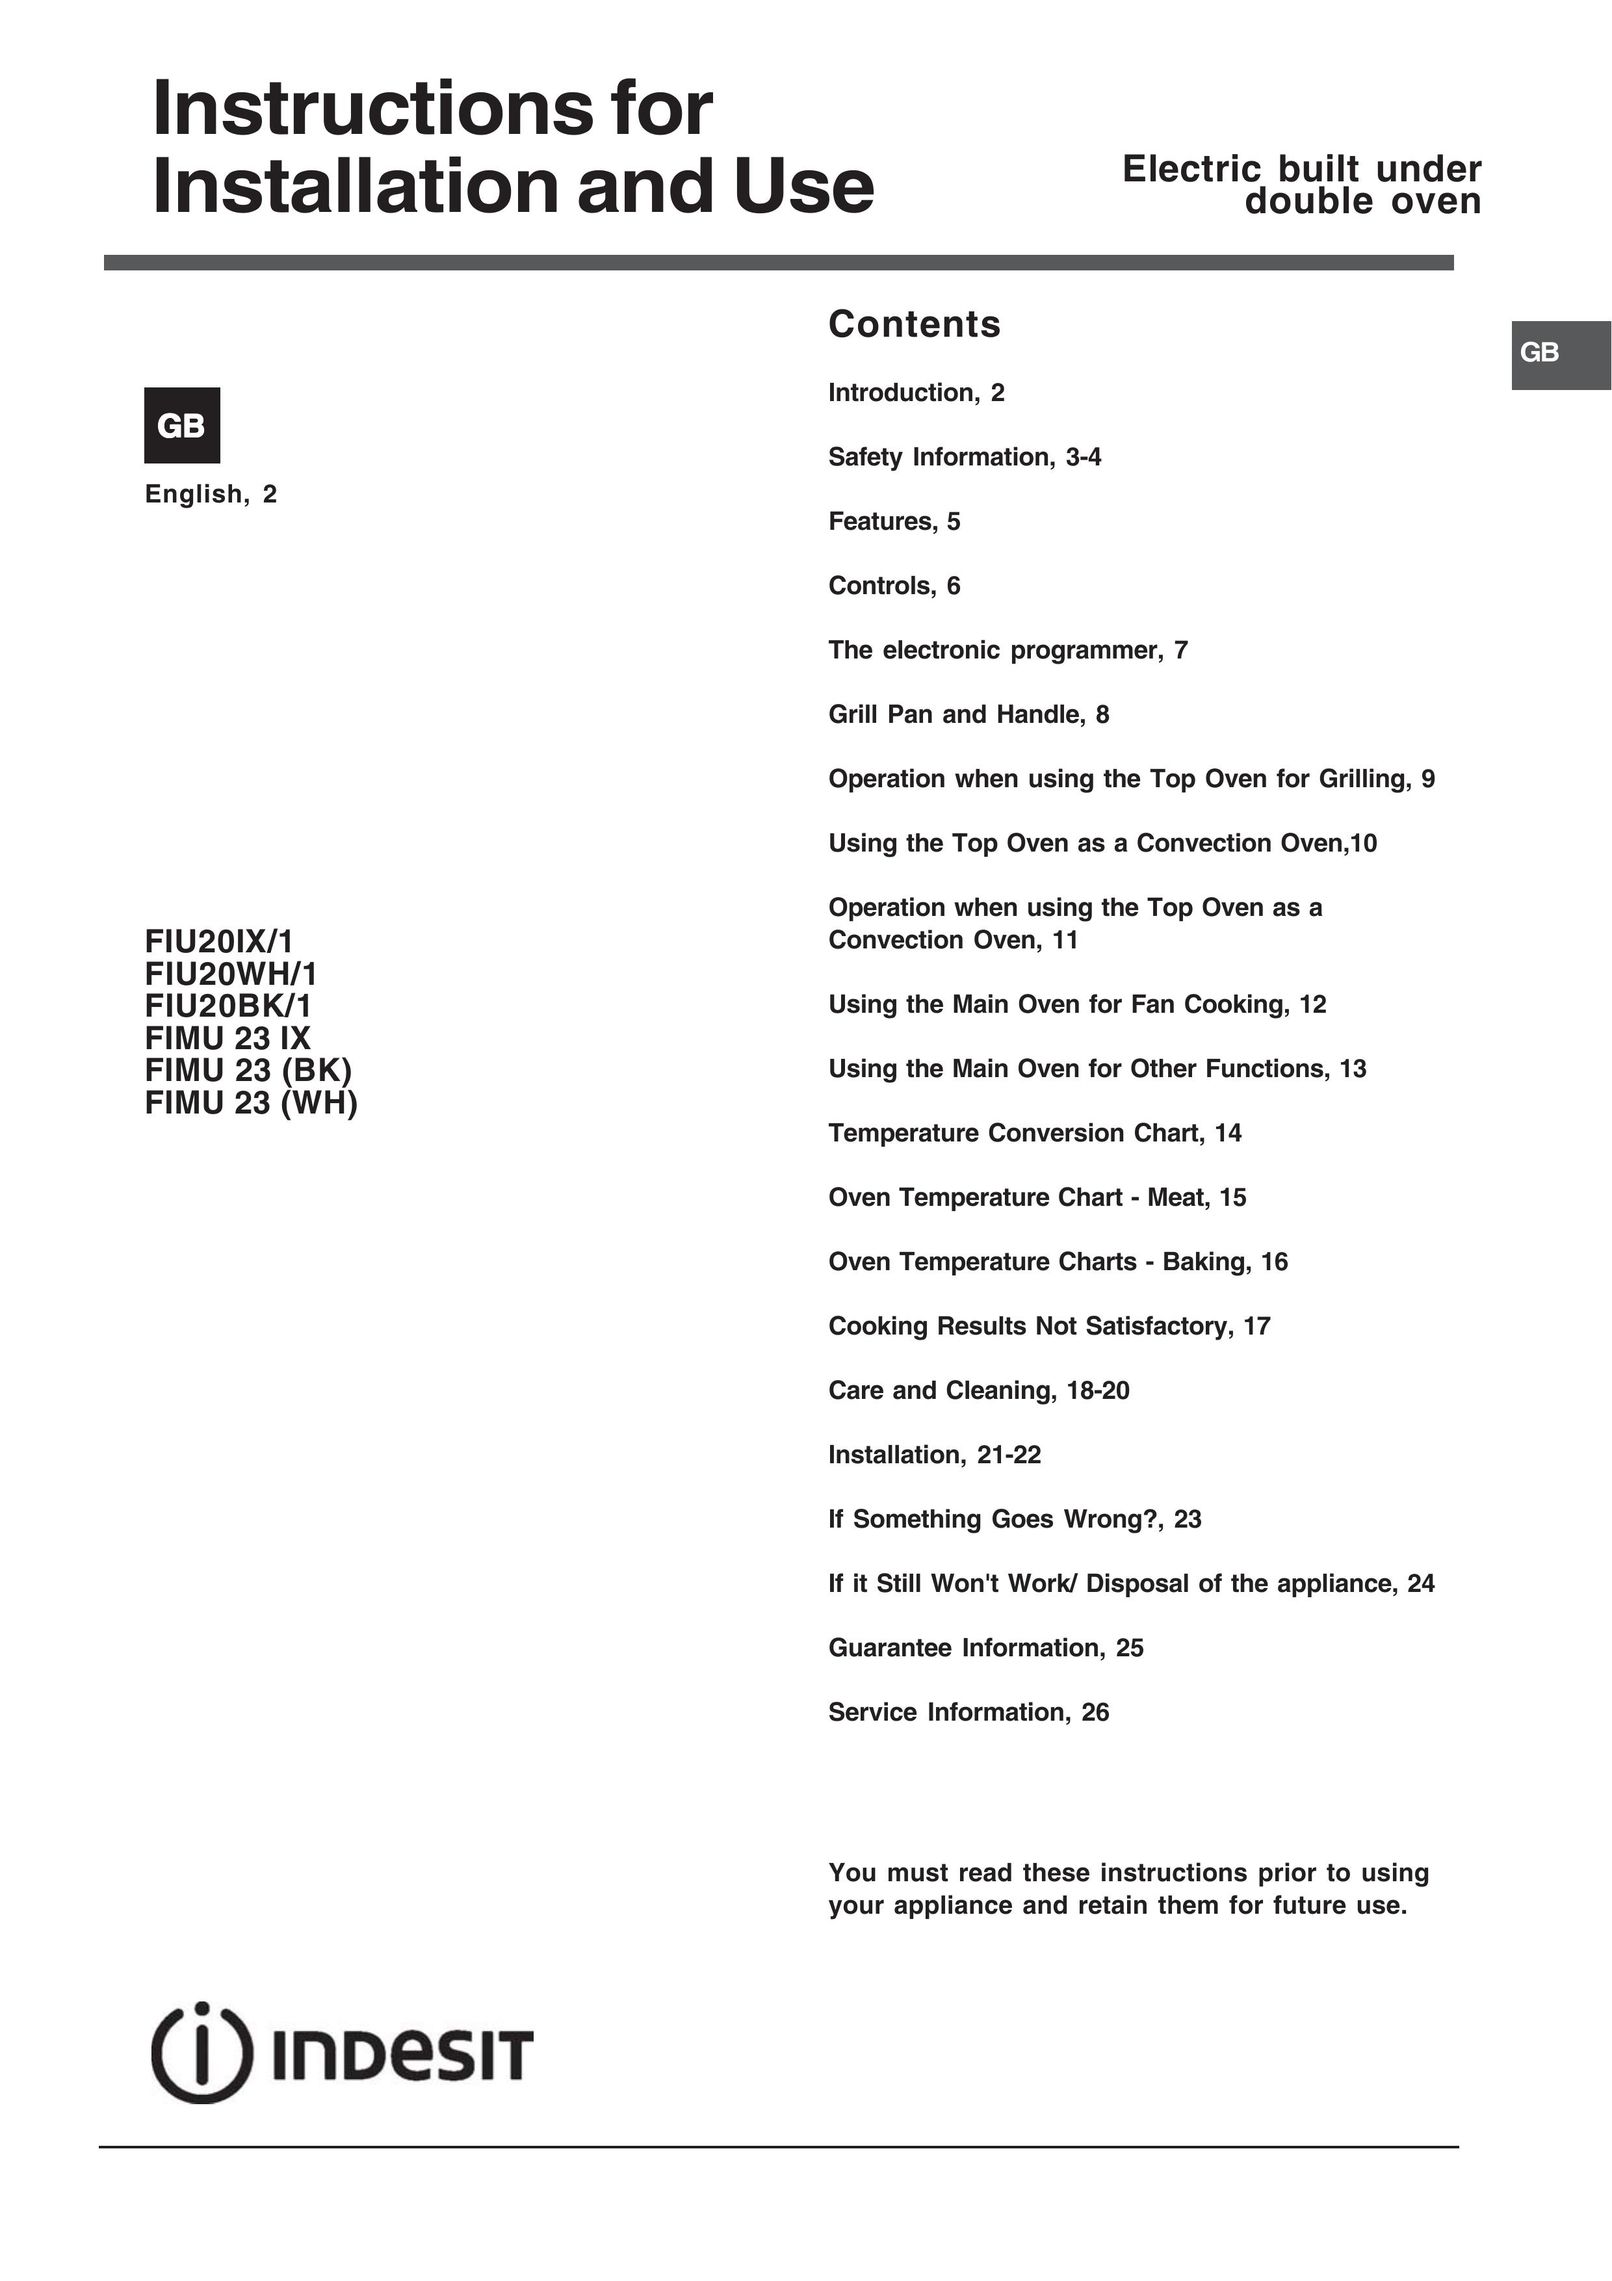 Indesit FIMU 23 (BK) Oven User Manual